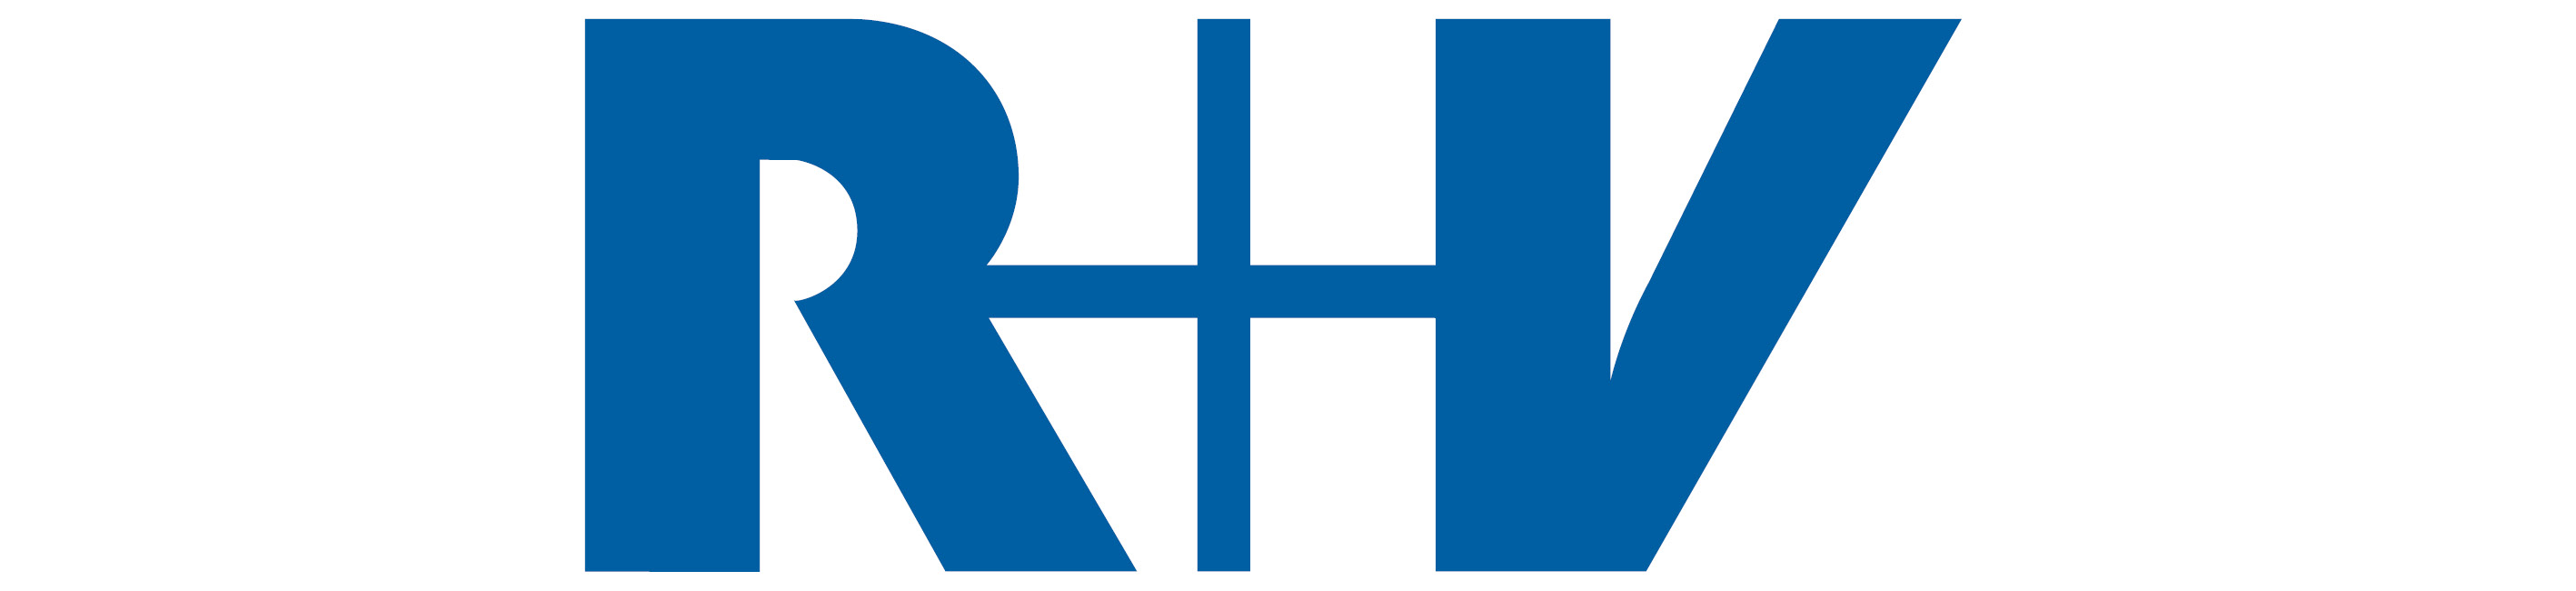 Logo RV